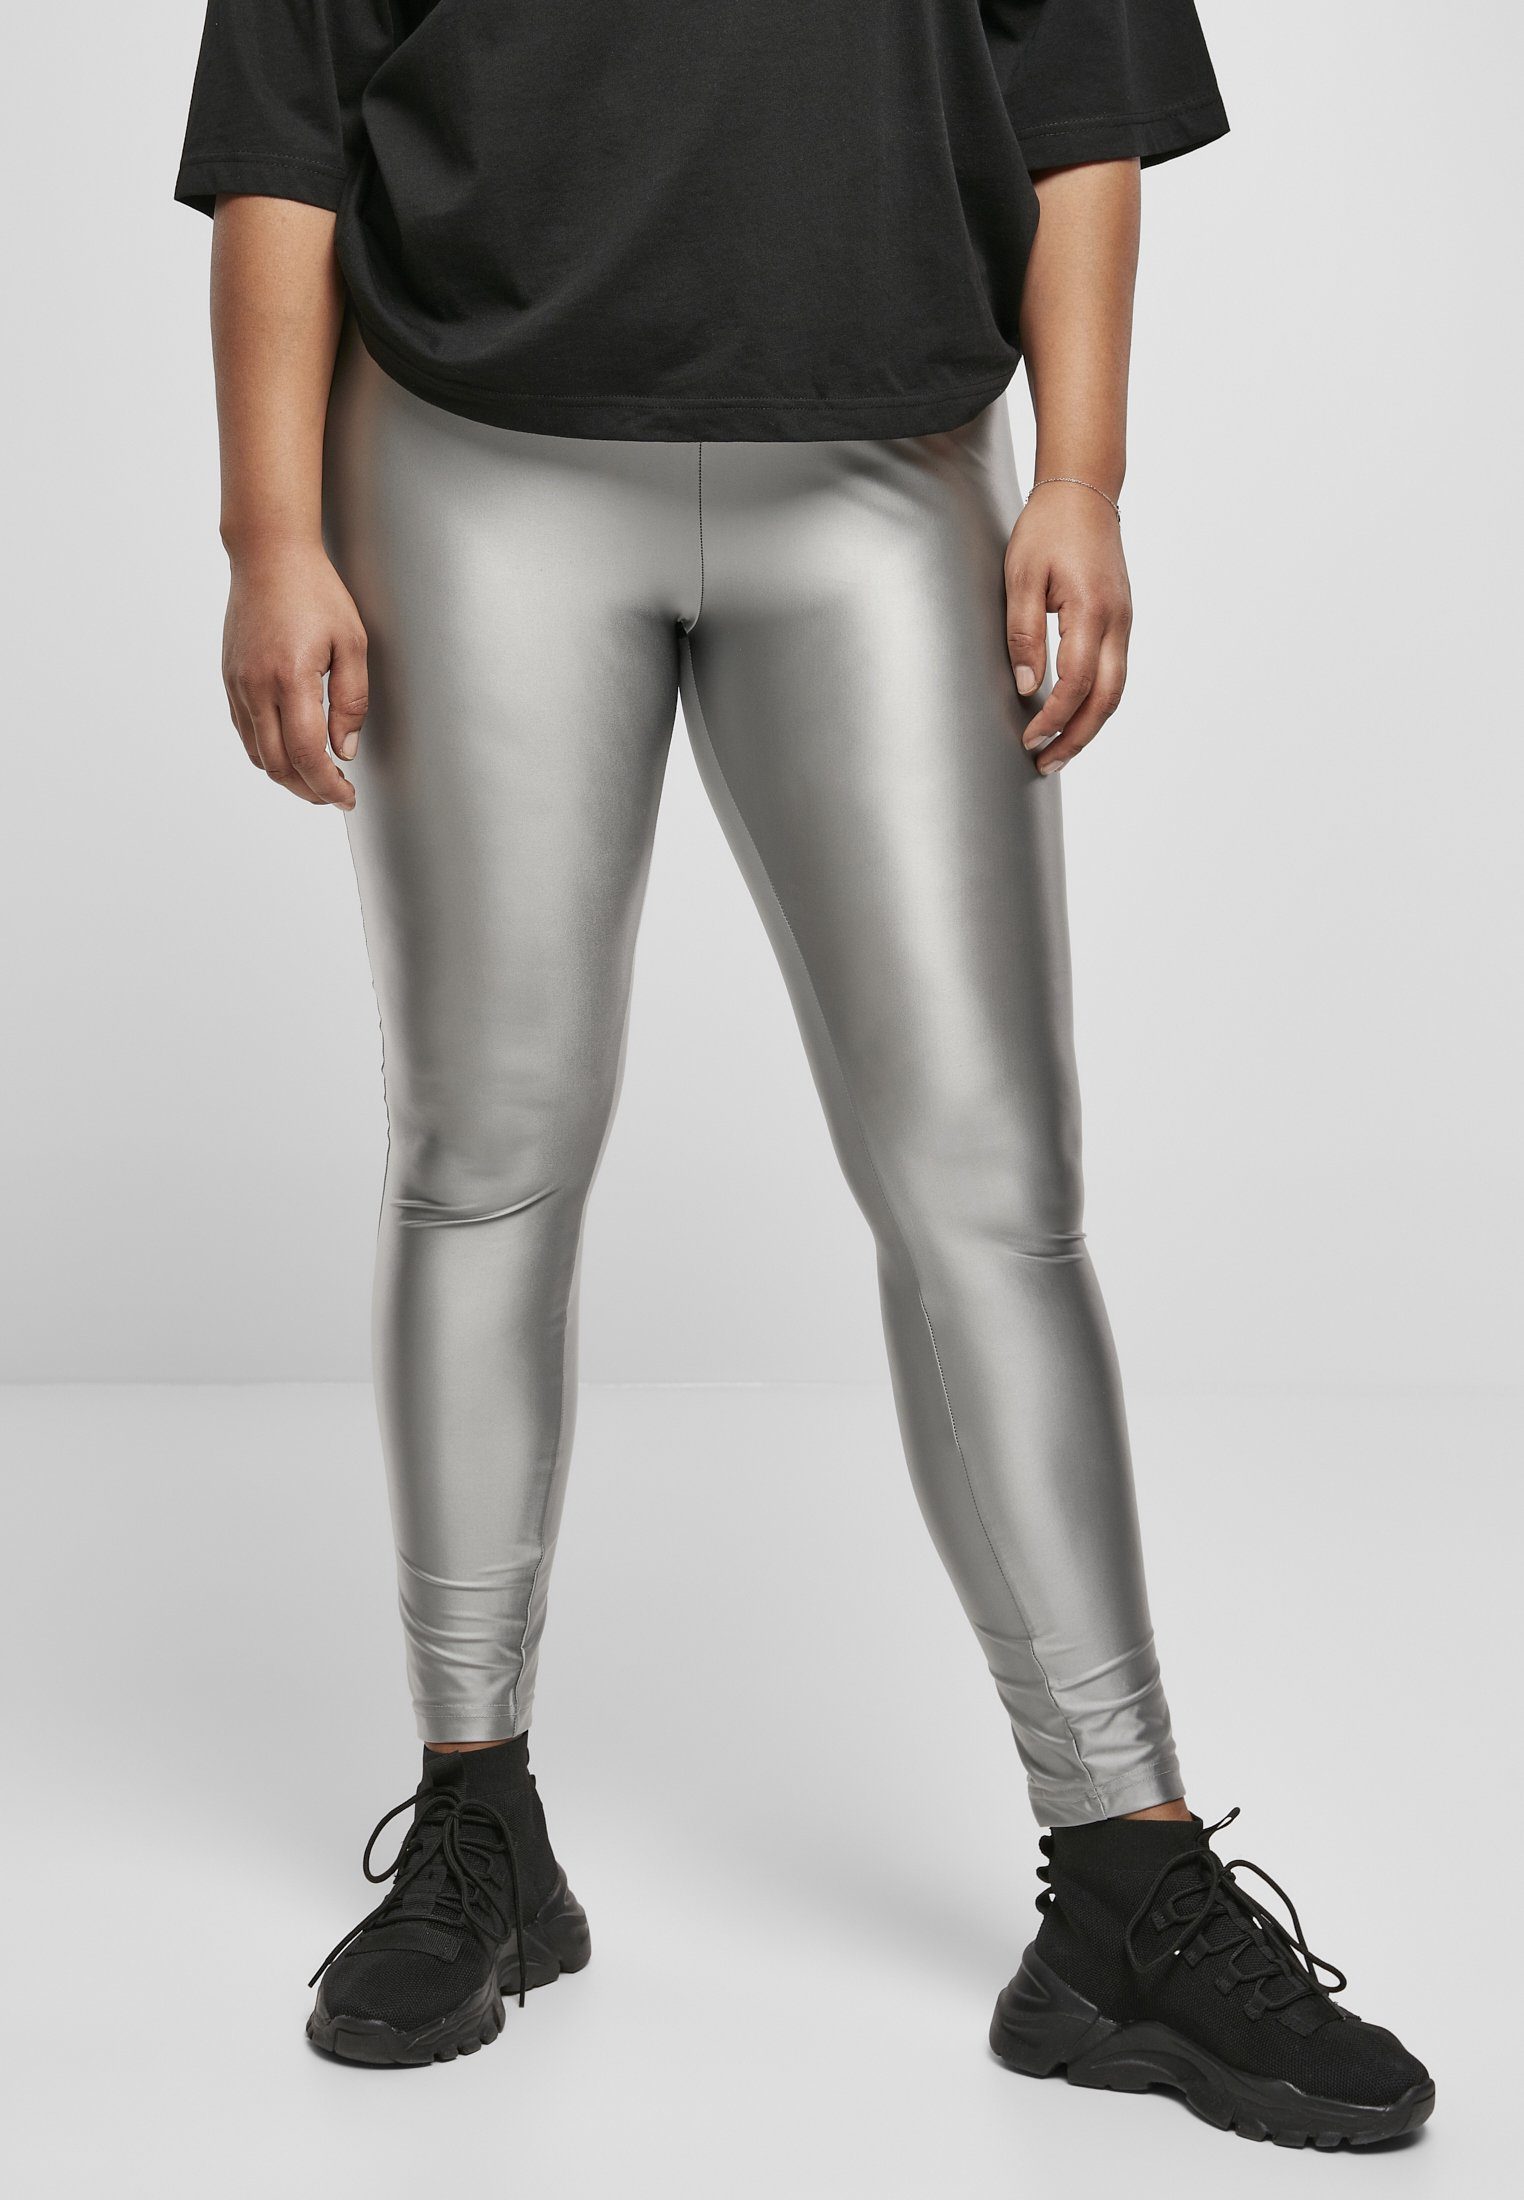 Ganz neu AUS! URBAN CLASSICS Leggings (1-tlg) darksilver Metallic Damen Shiny Highwaist Leggings Ladies